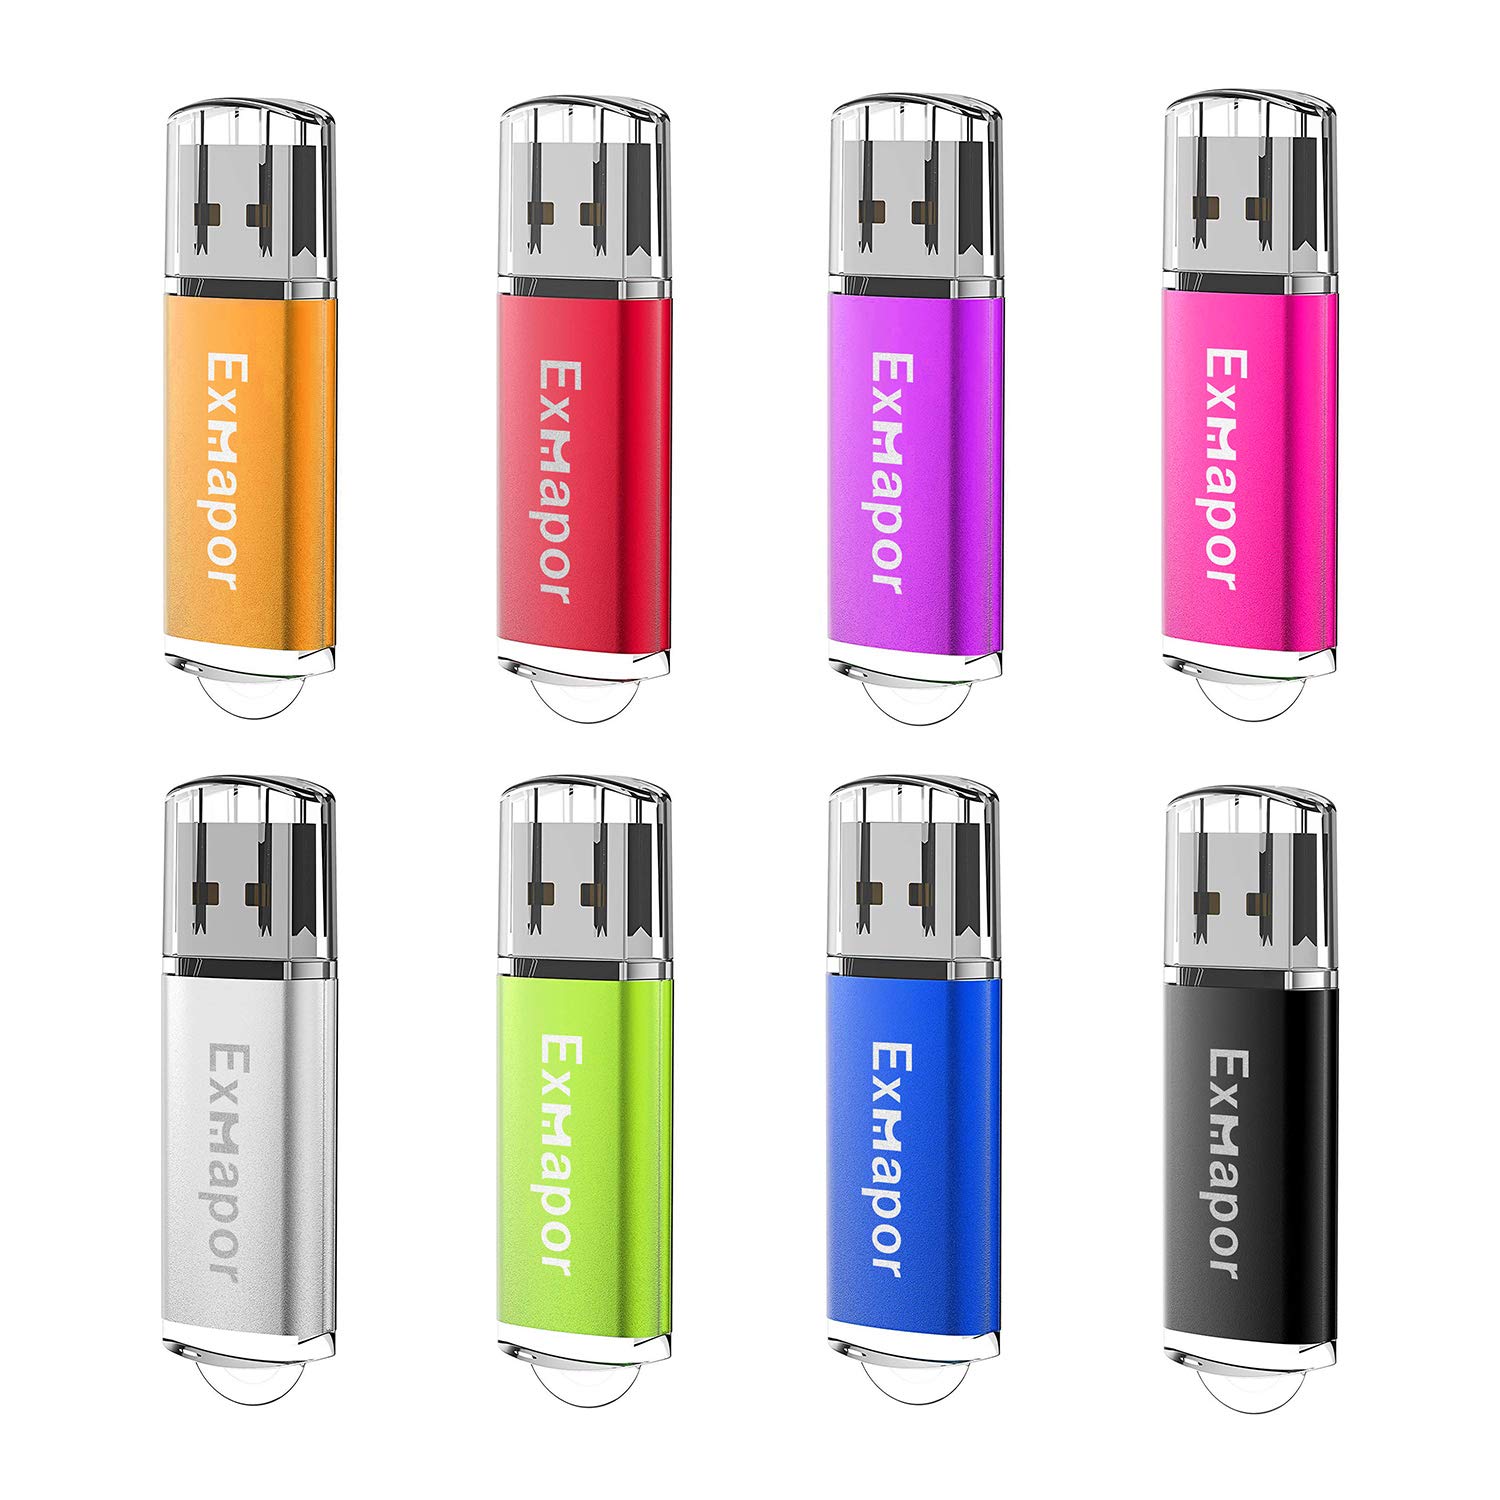 USBメモリ 8個セット Exmapor USB 32GB メモリースティックキャップ式 （8色：黒、銀、青、紫、緑、赤、ピンク、オレンジ）